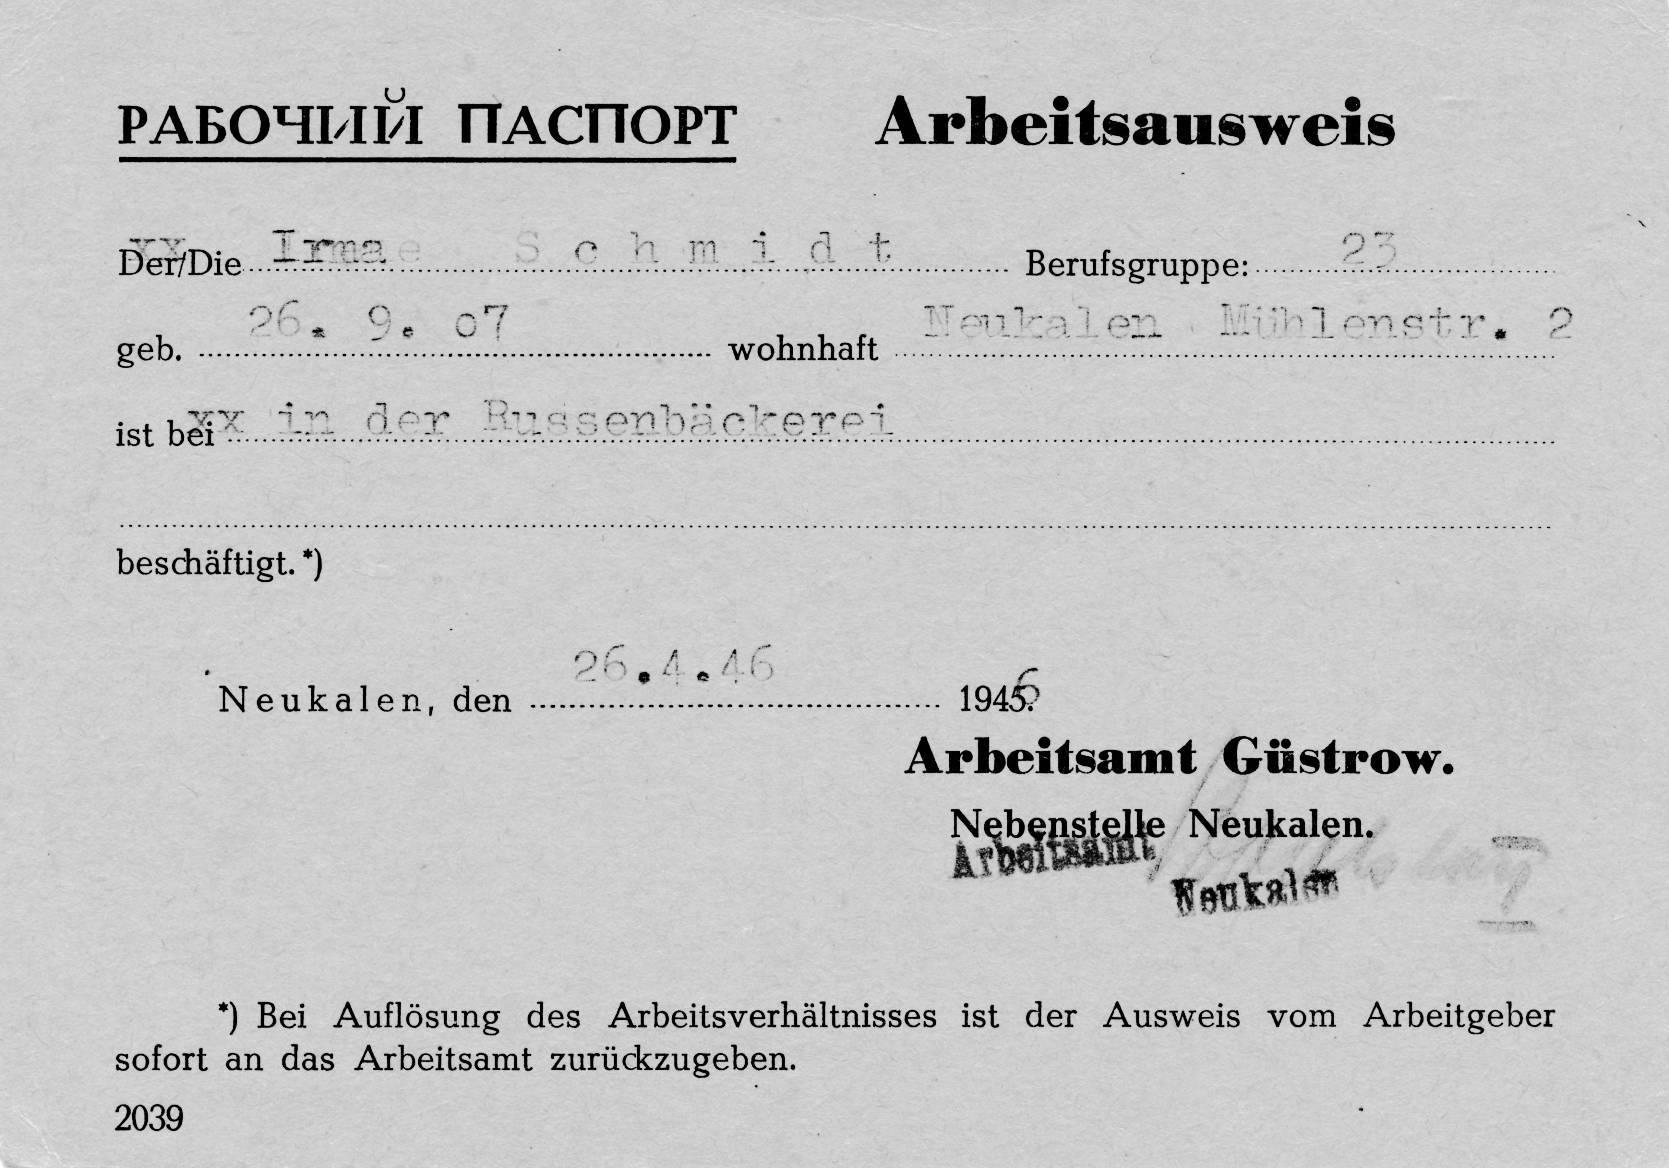 Arbeitsausweis für Irma Schmidt als Beschäftigte der „Russenbäckerei“ (26.4.1946).